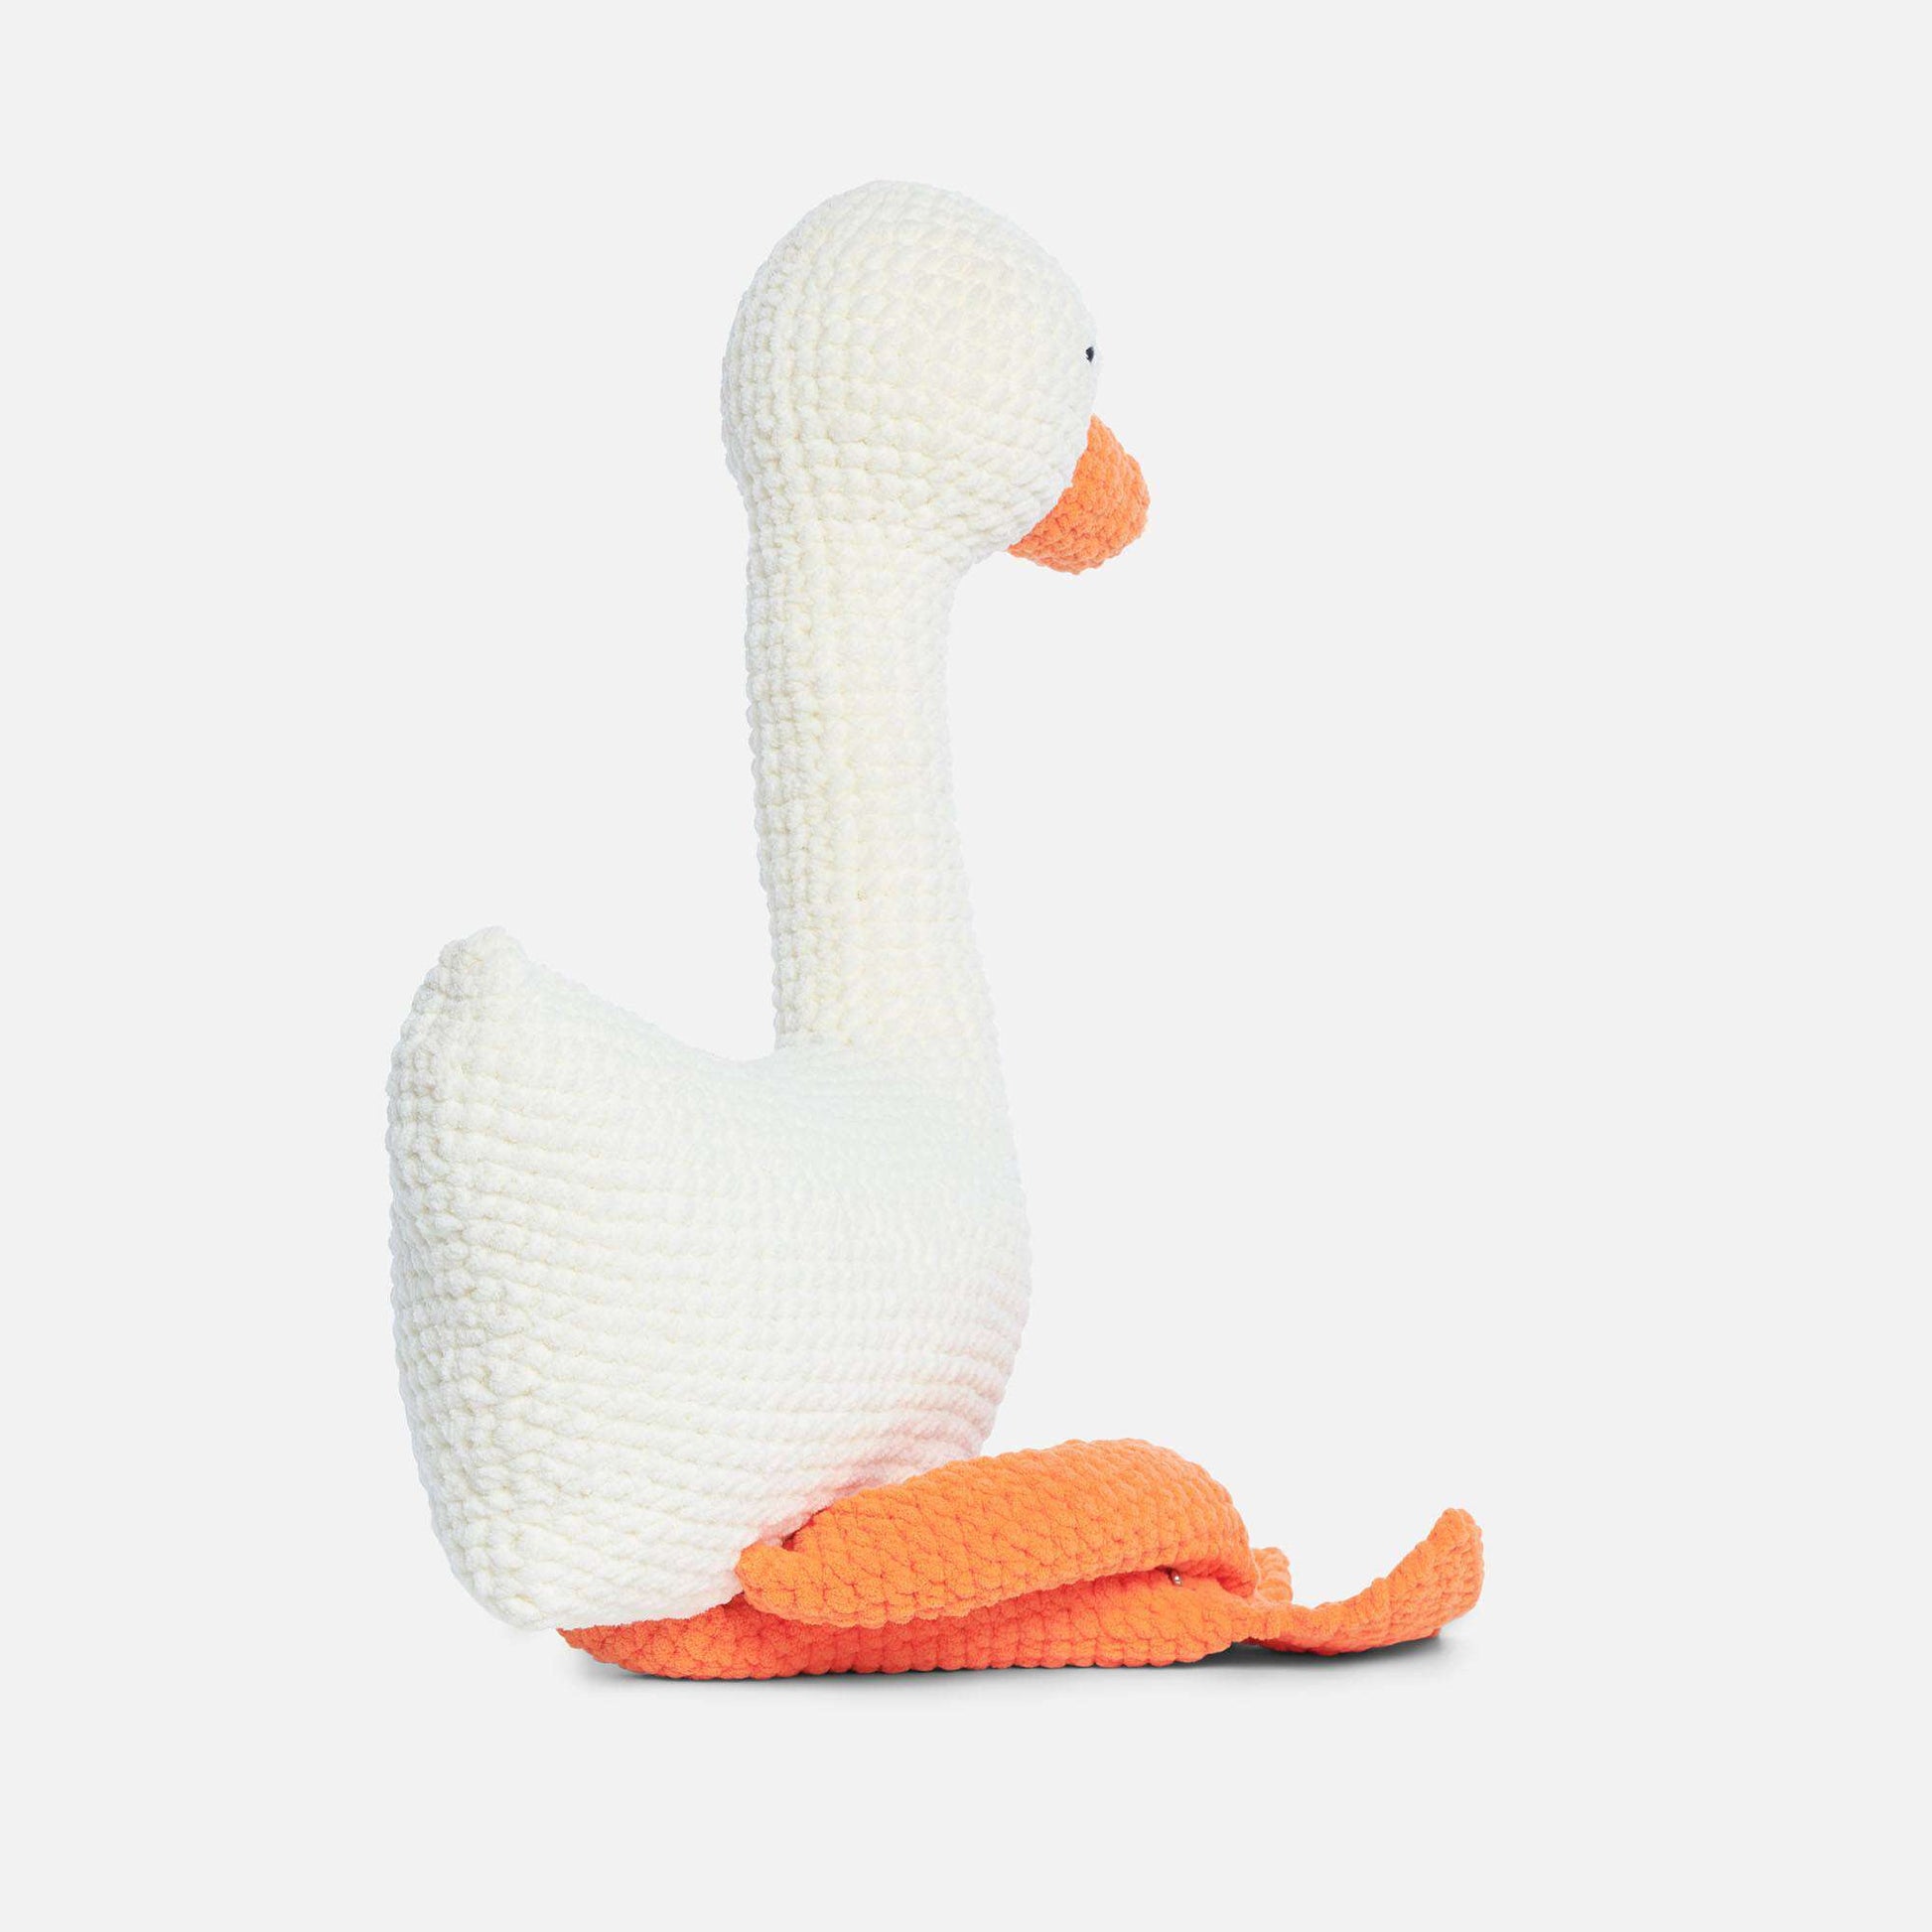 Free Bernat Silly Goose To Crochet Pattern